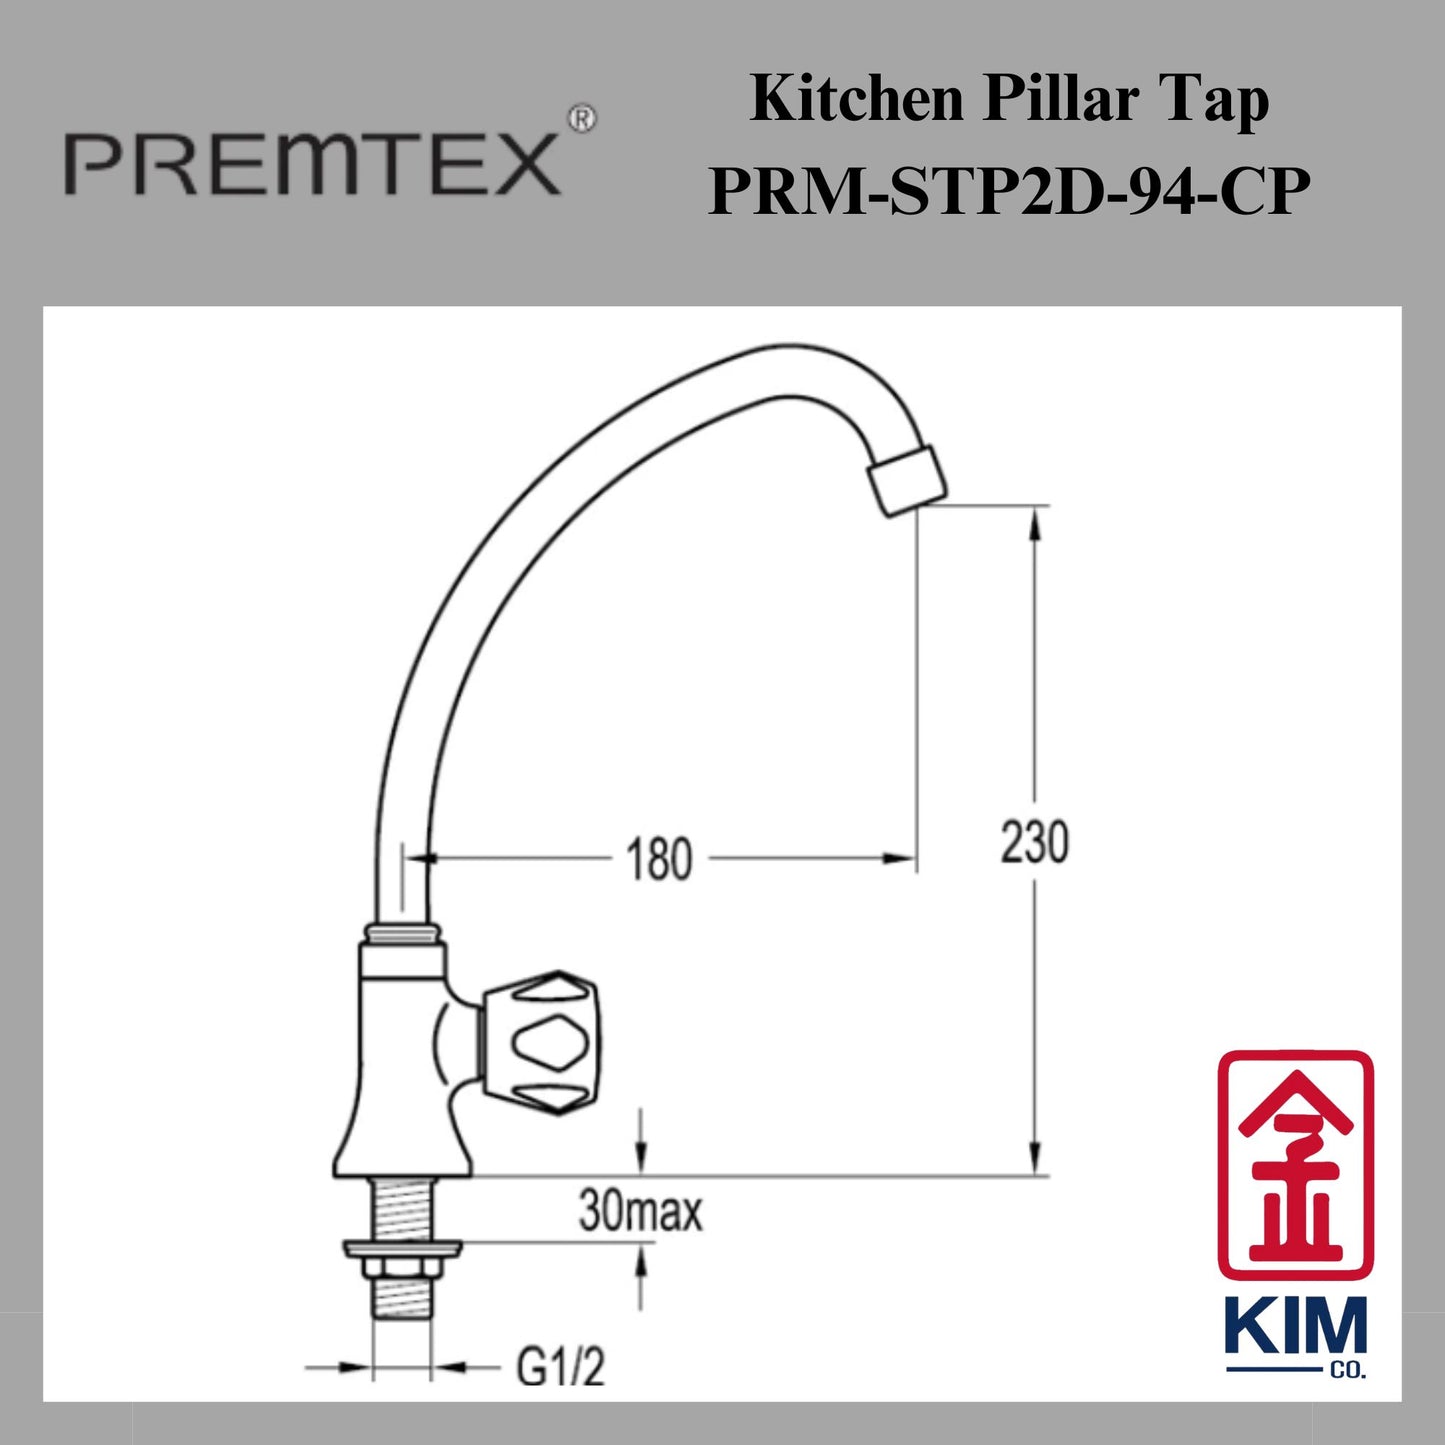 Premtex Deck Mounted Kitchen Sink Tap (PRM-STP2D-94-CP)